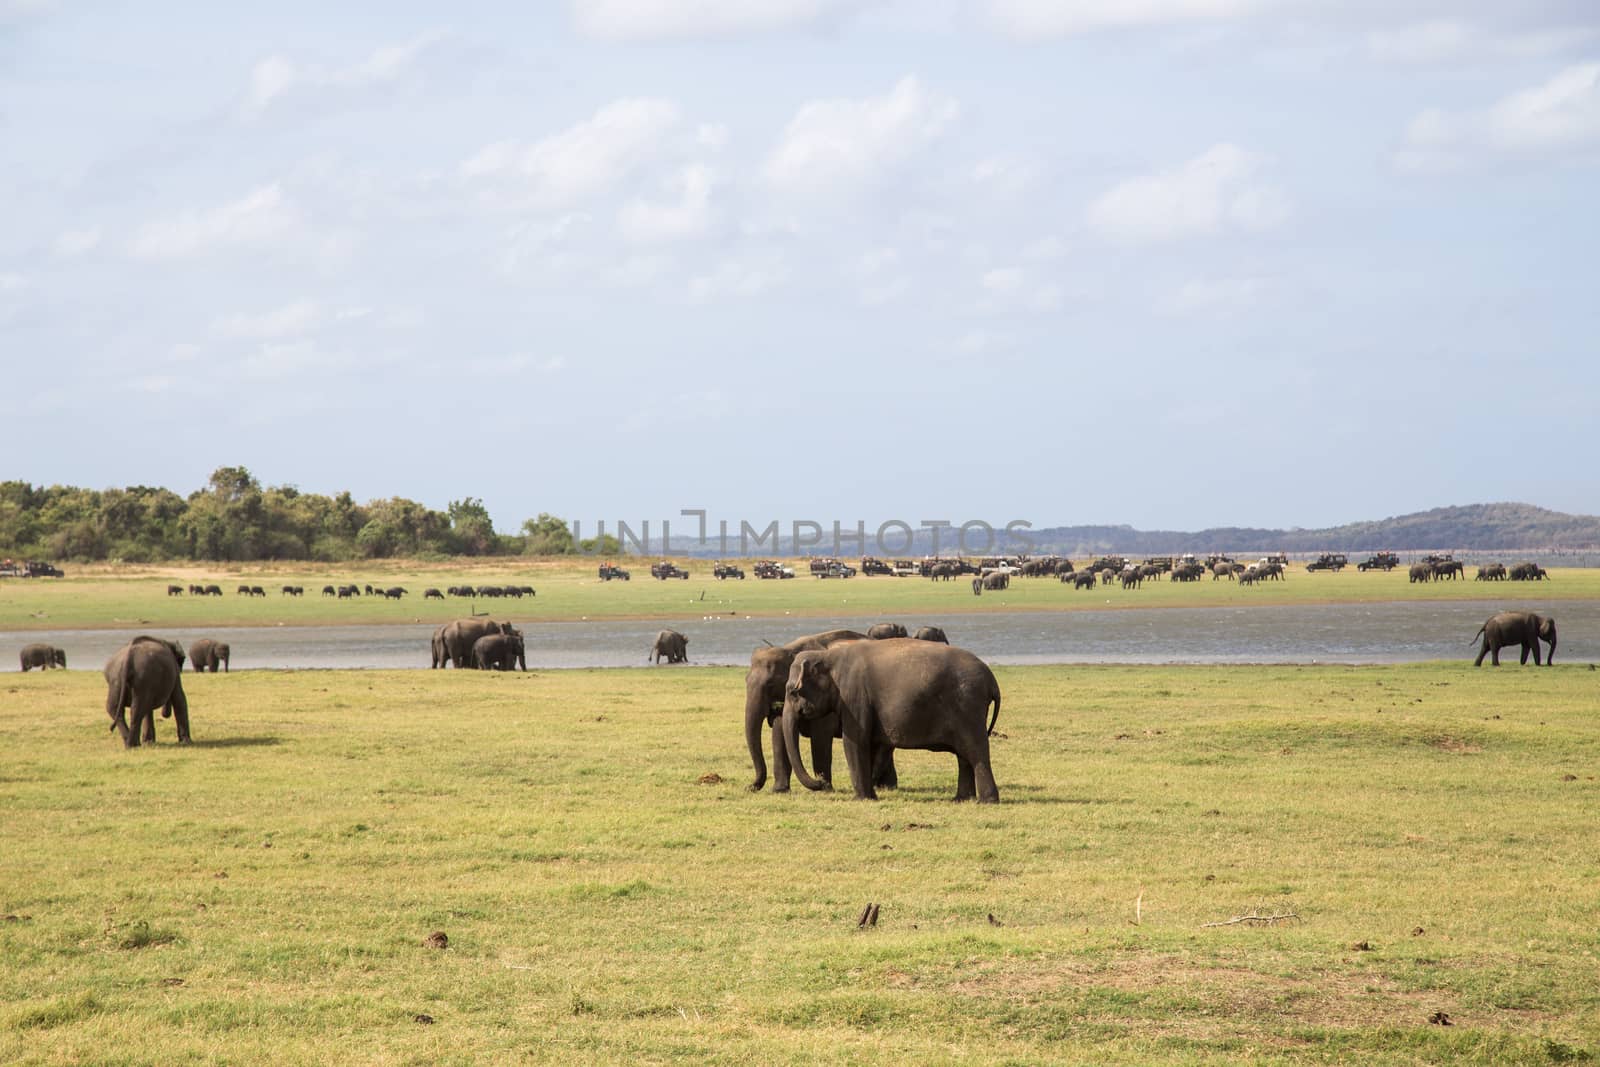 Kaudulla National Park, Sri Lanka - August 16, 2018: A herd of elephants at a lake in Kaudulla National Park